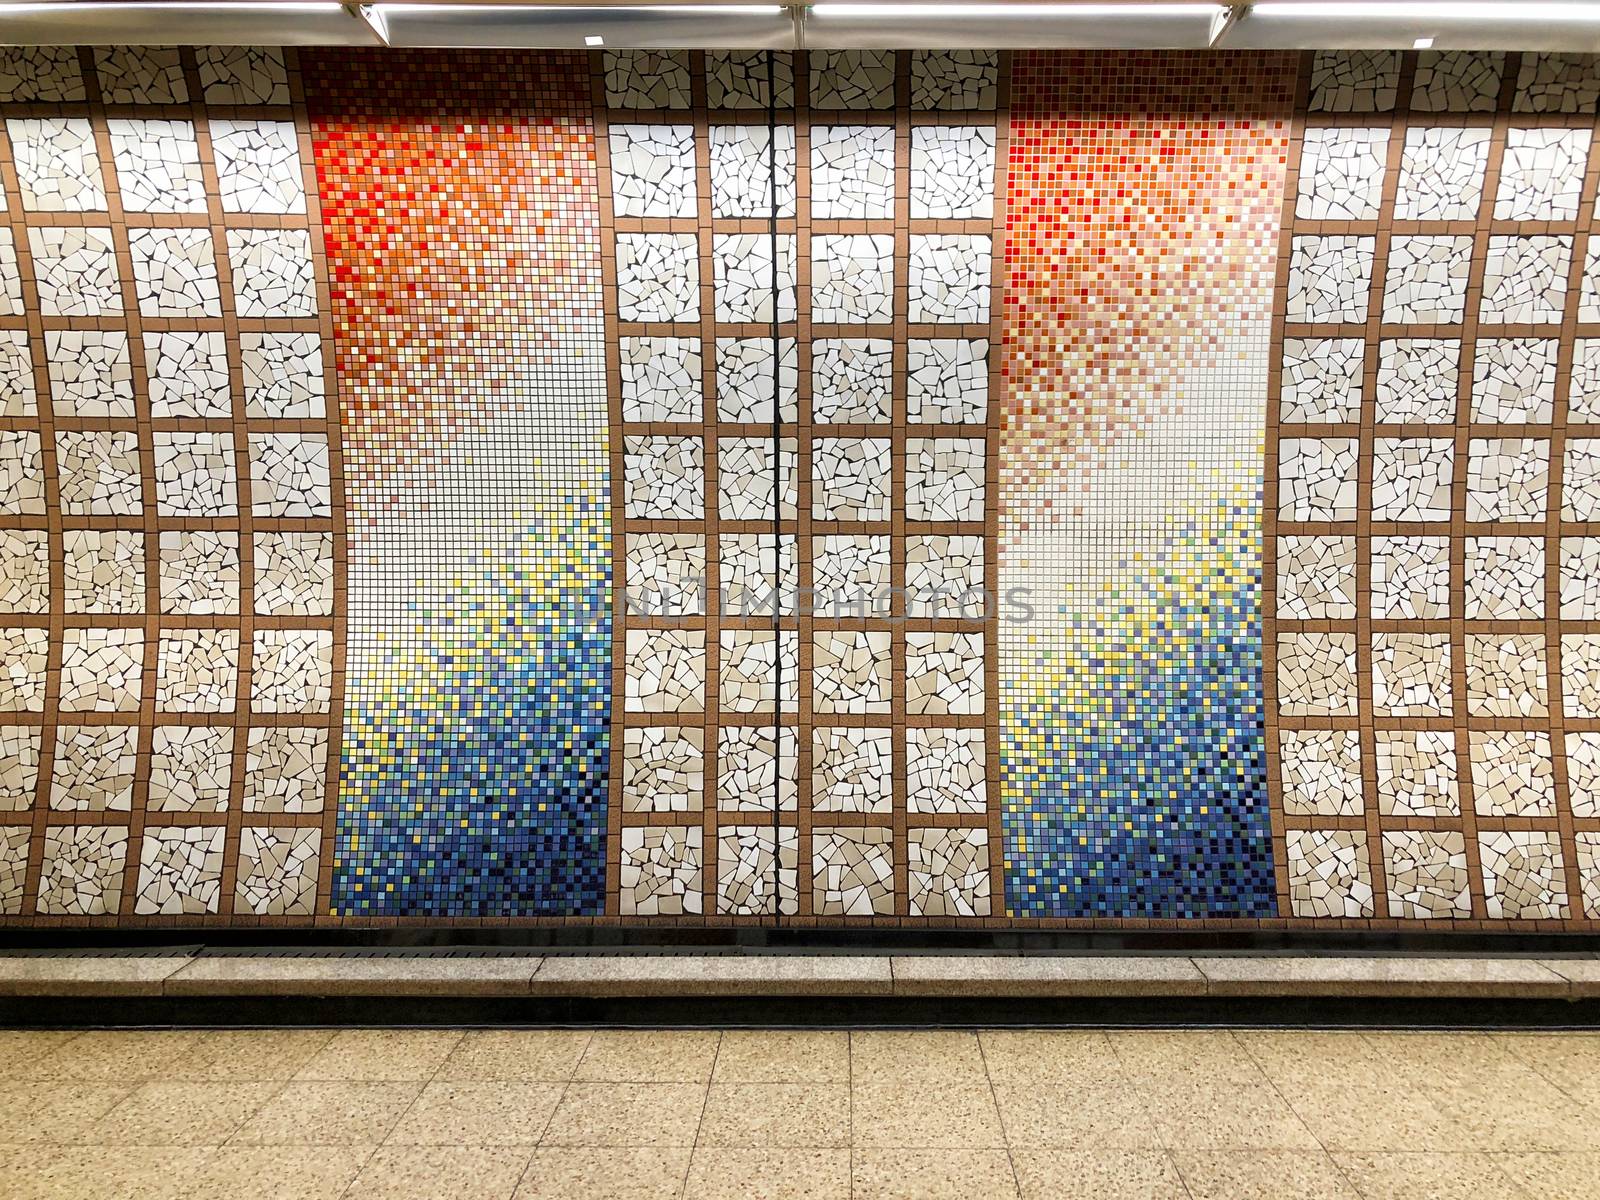 Tile wall in the subway at Seoul Korea by Surasak